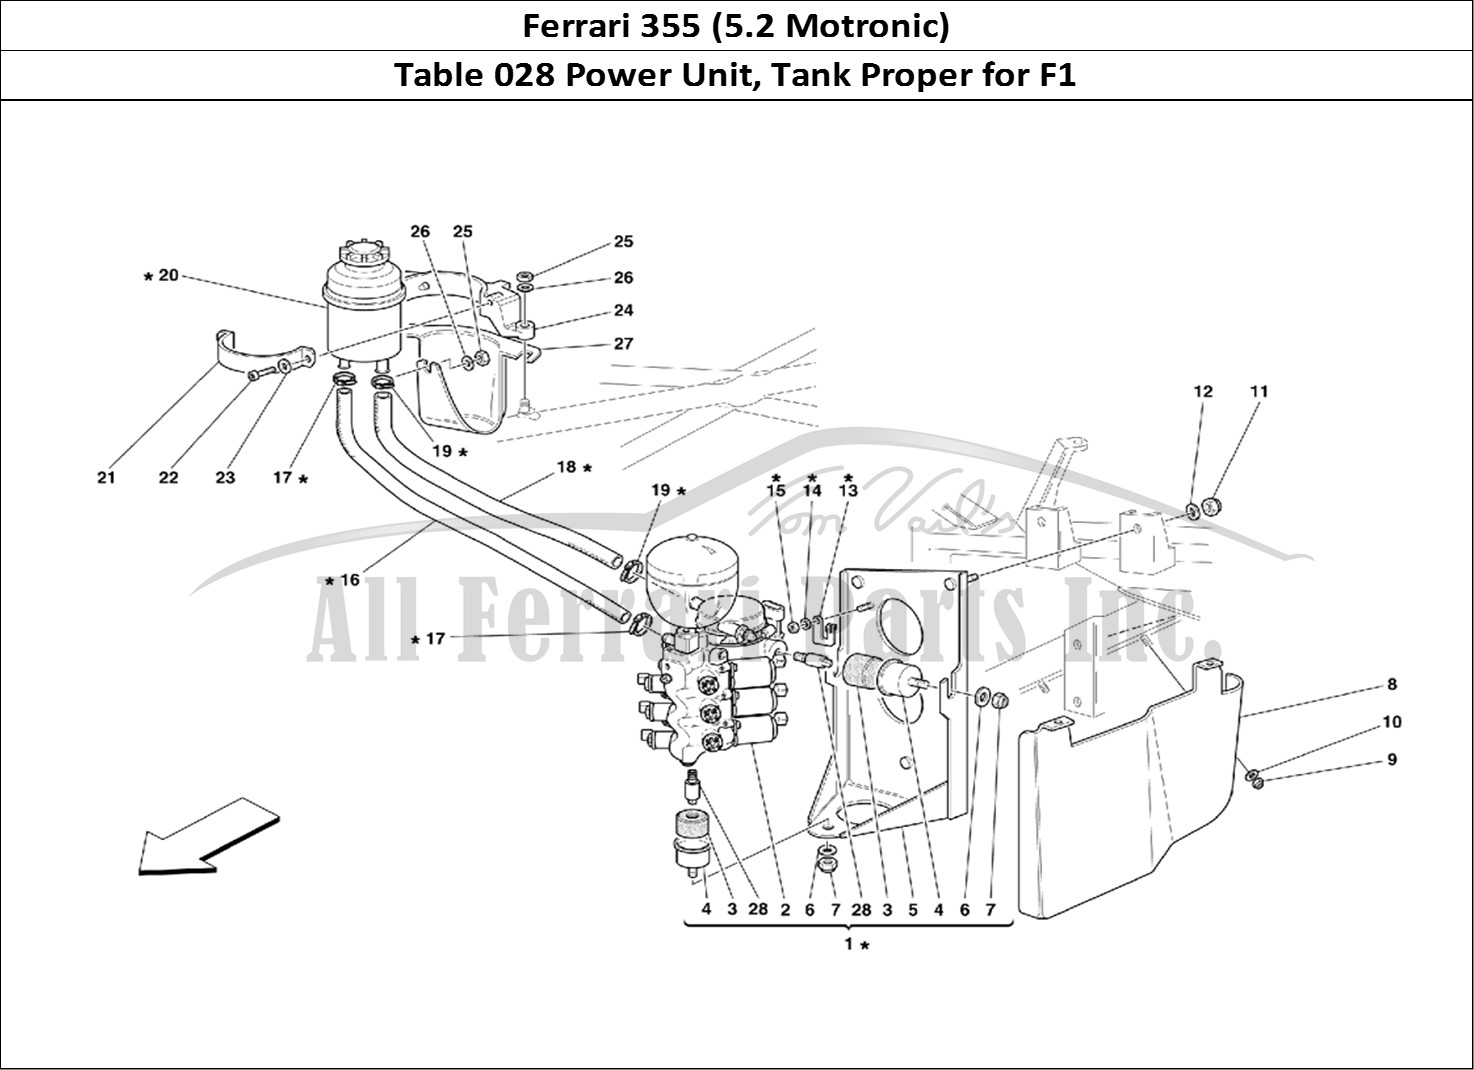 Ferrari Parts Ferrari 355 (5.2 Motronic) Page 028 Power Unit and Tank -Vali